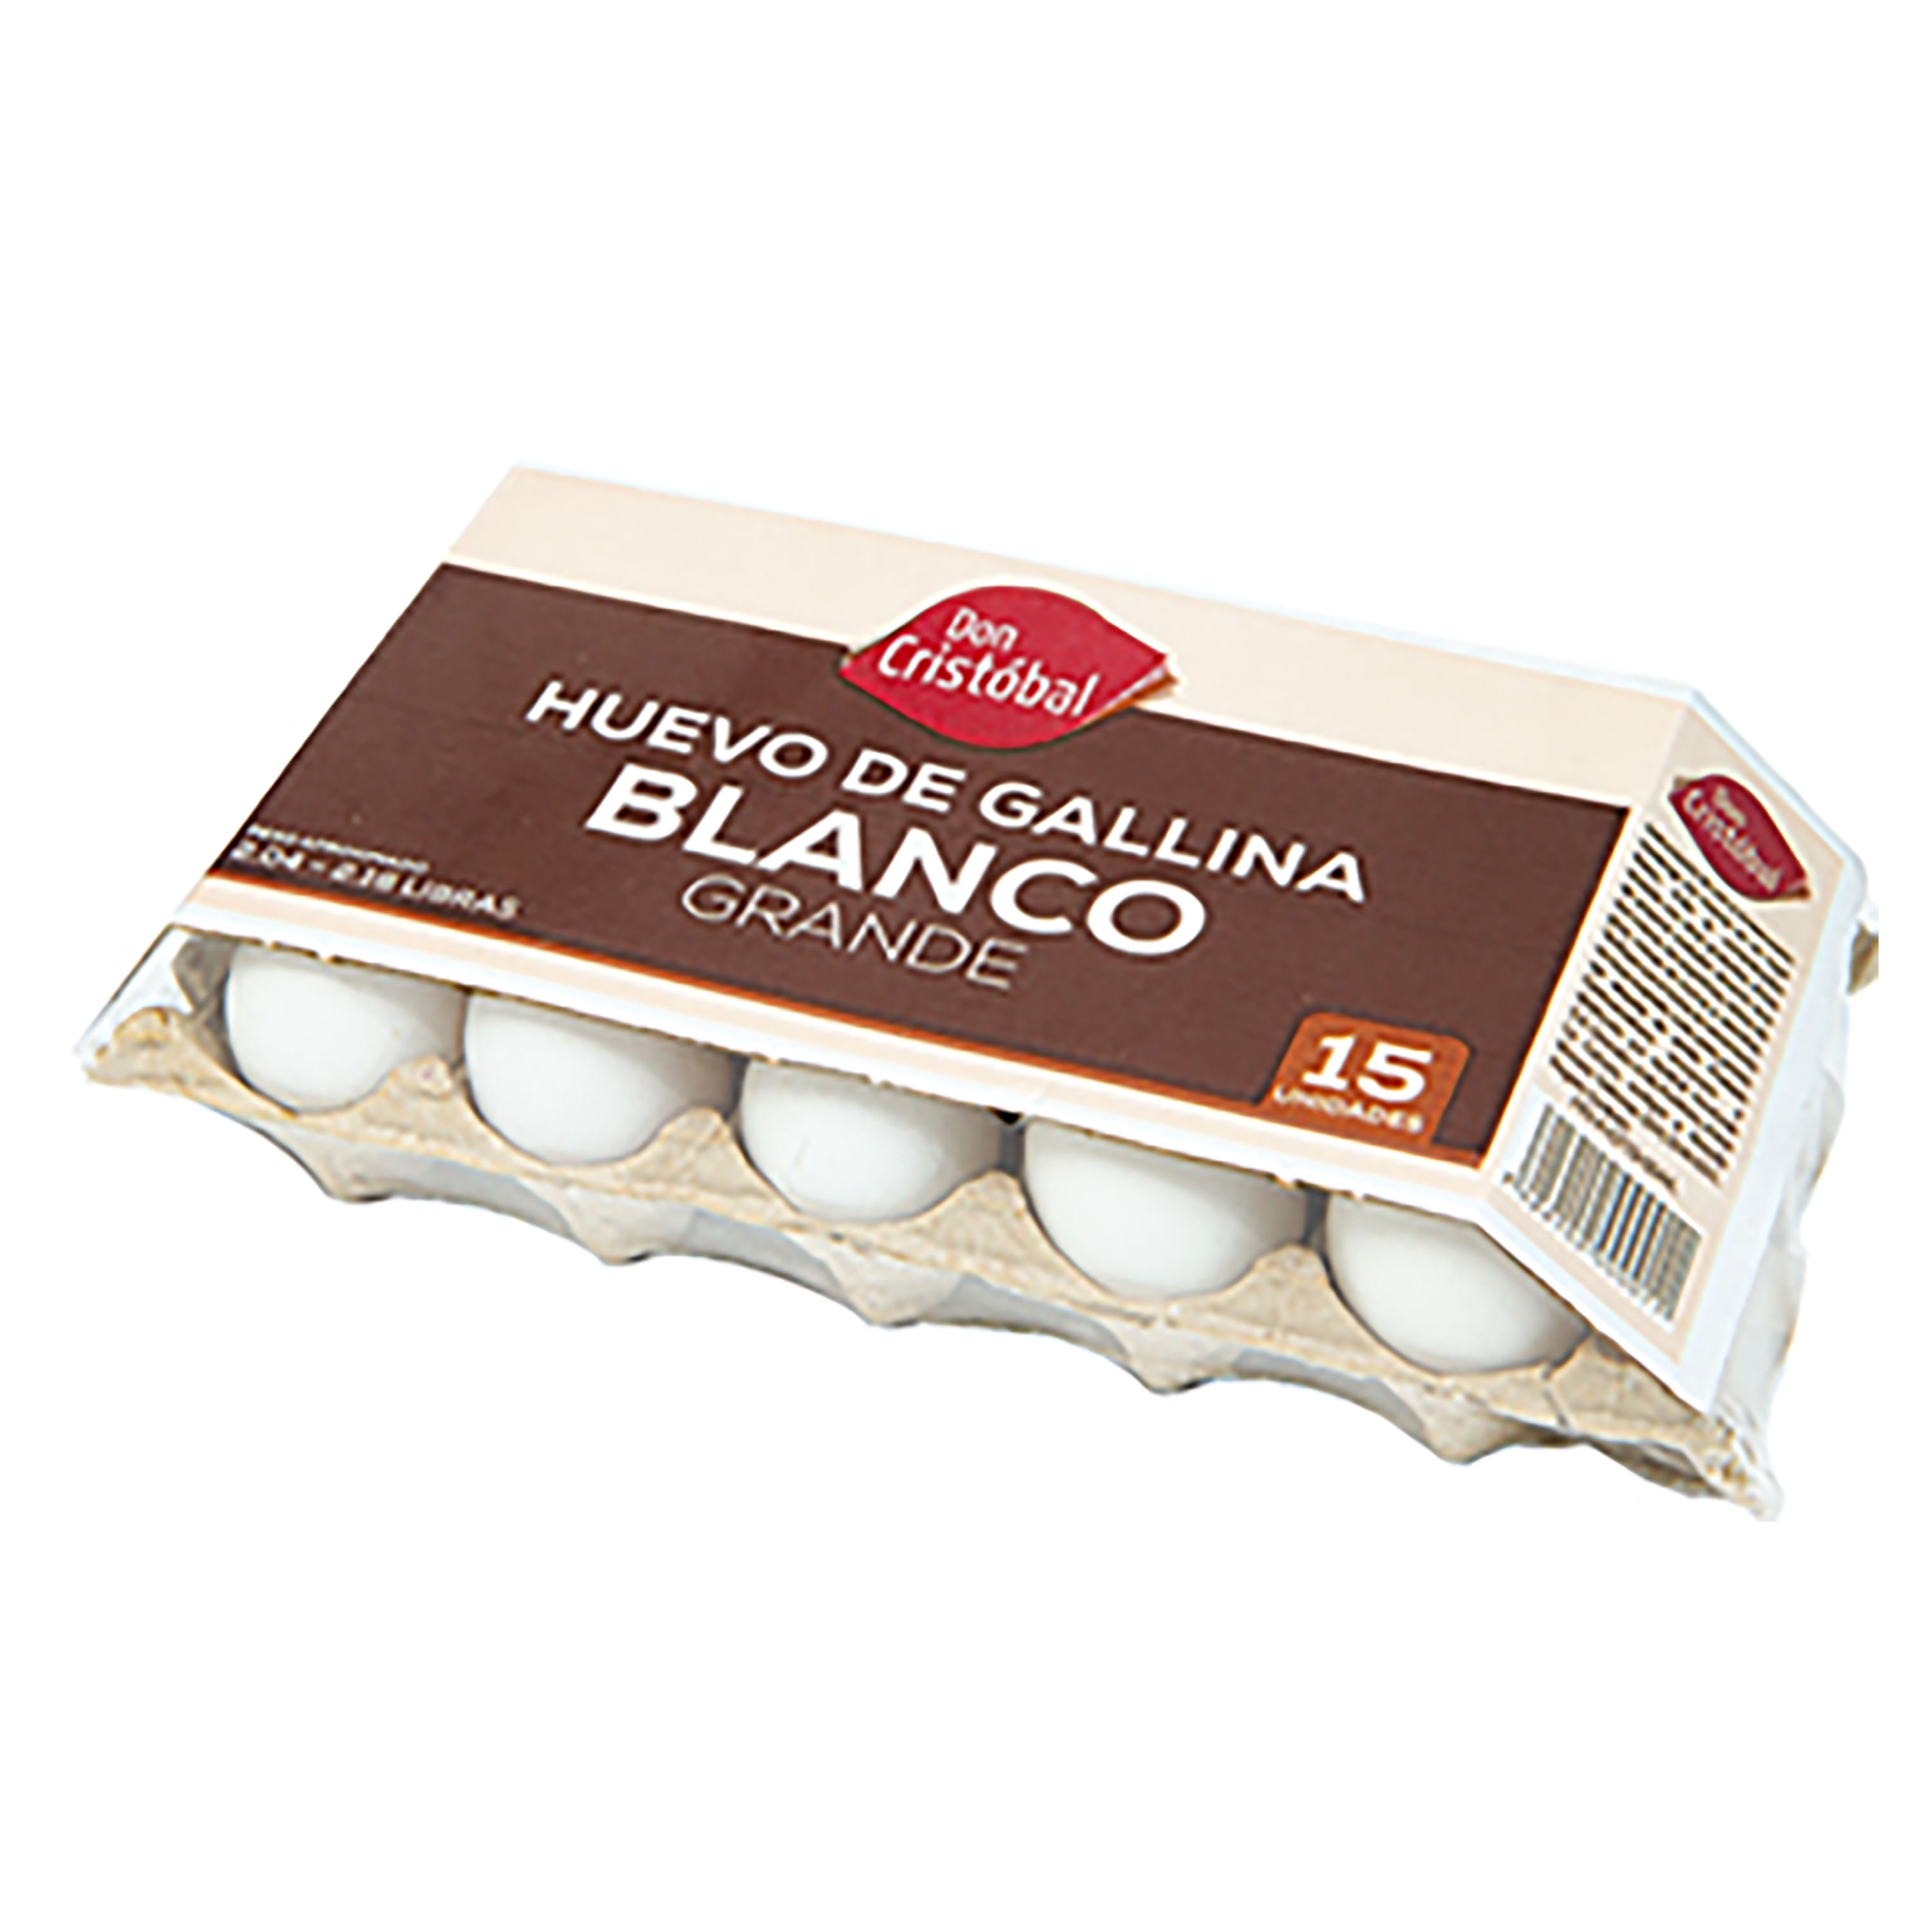 Cajilla-de-Huevos-Blancos-Marca-Don-Cristobal-Grande-15-unidades-1-9827